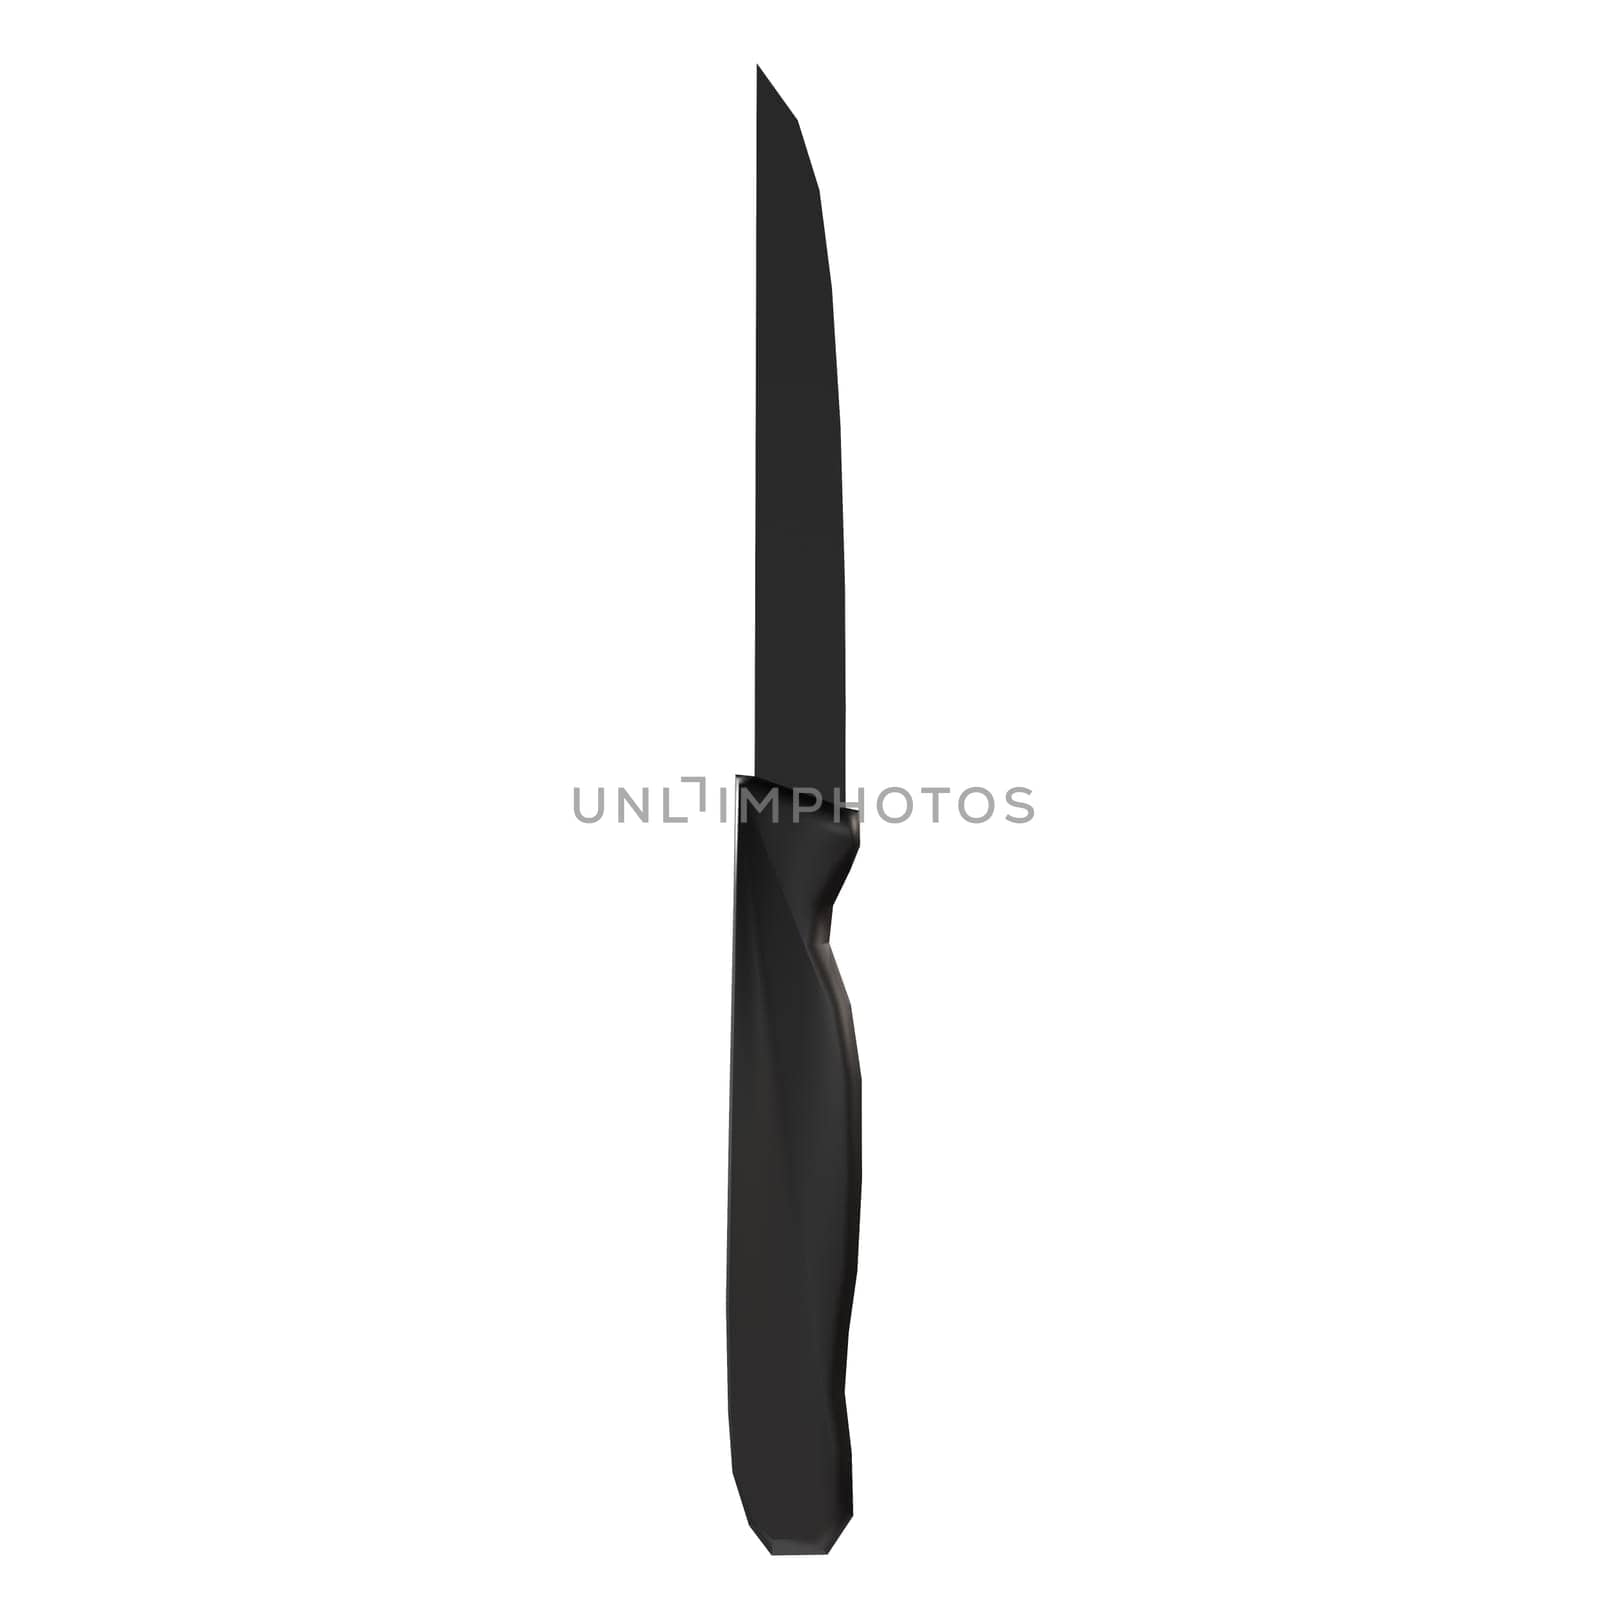 Black Knife isolated on white background. High quality 3d illustration